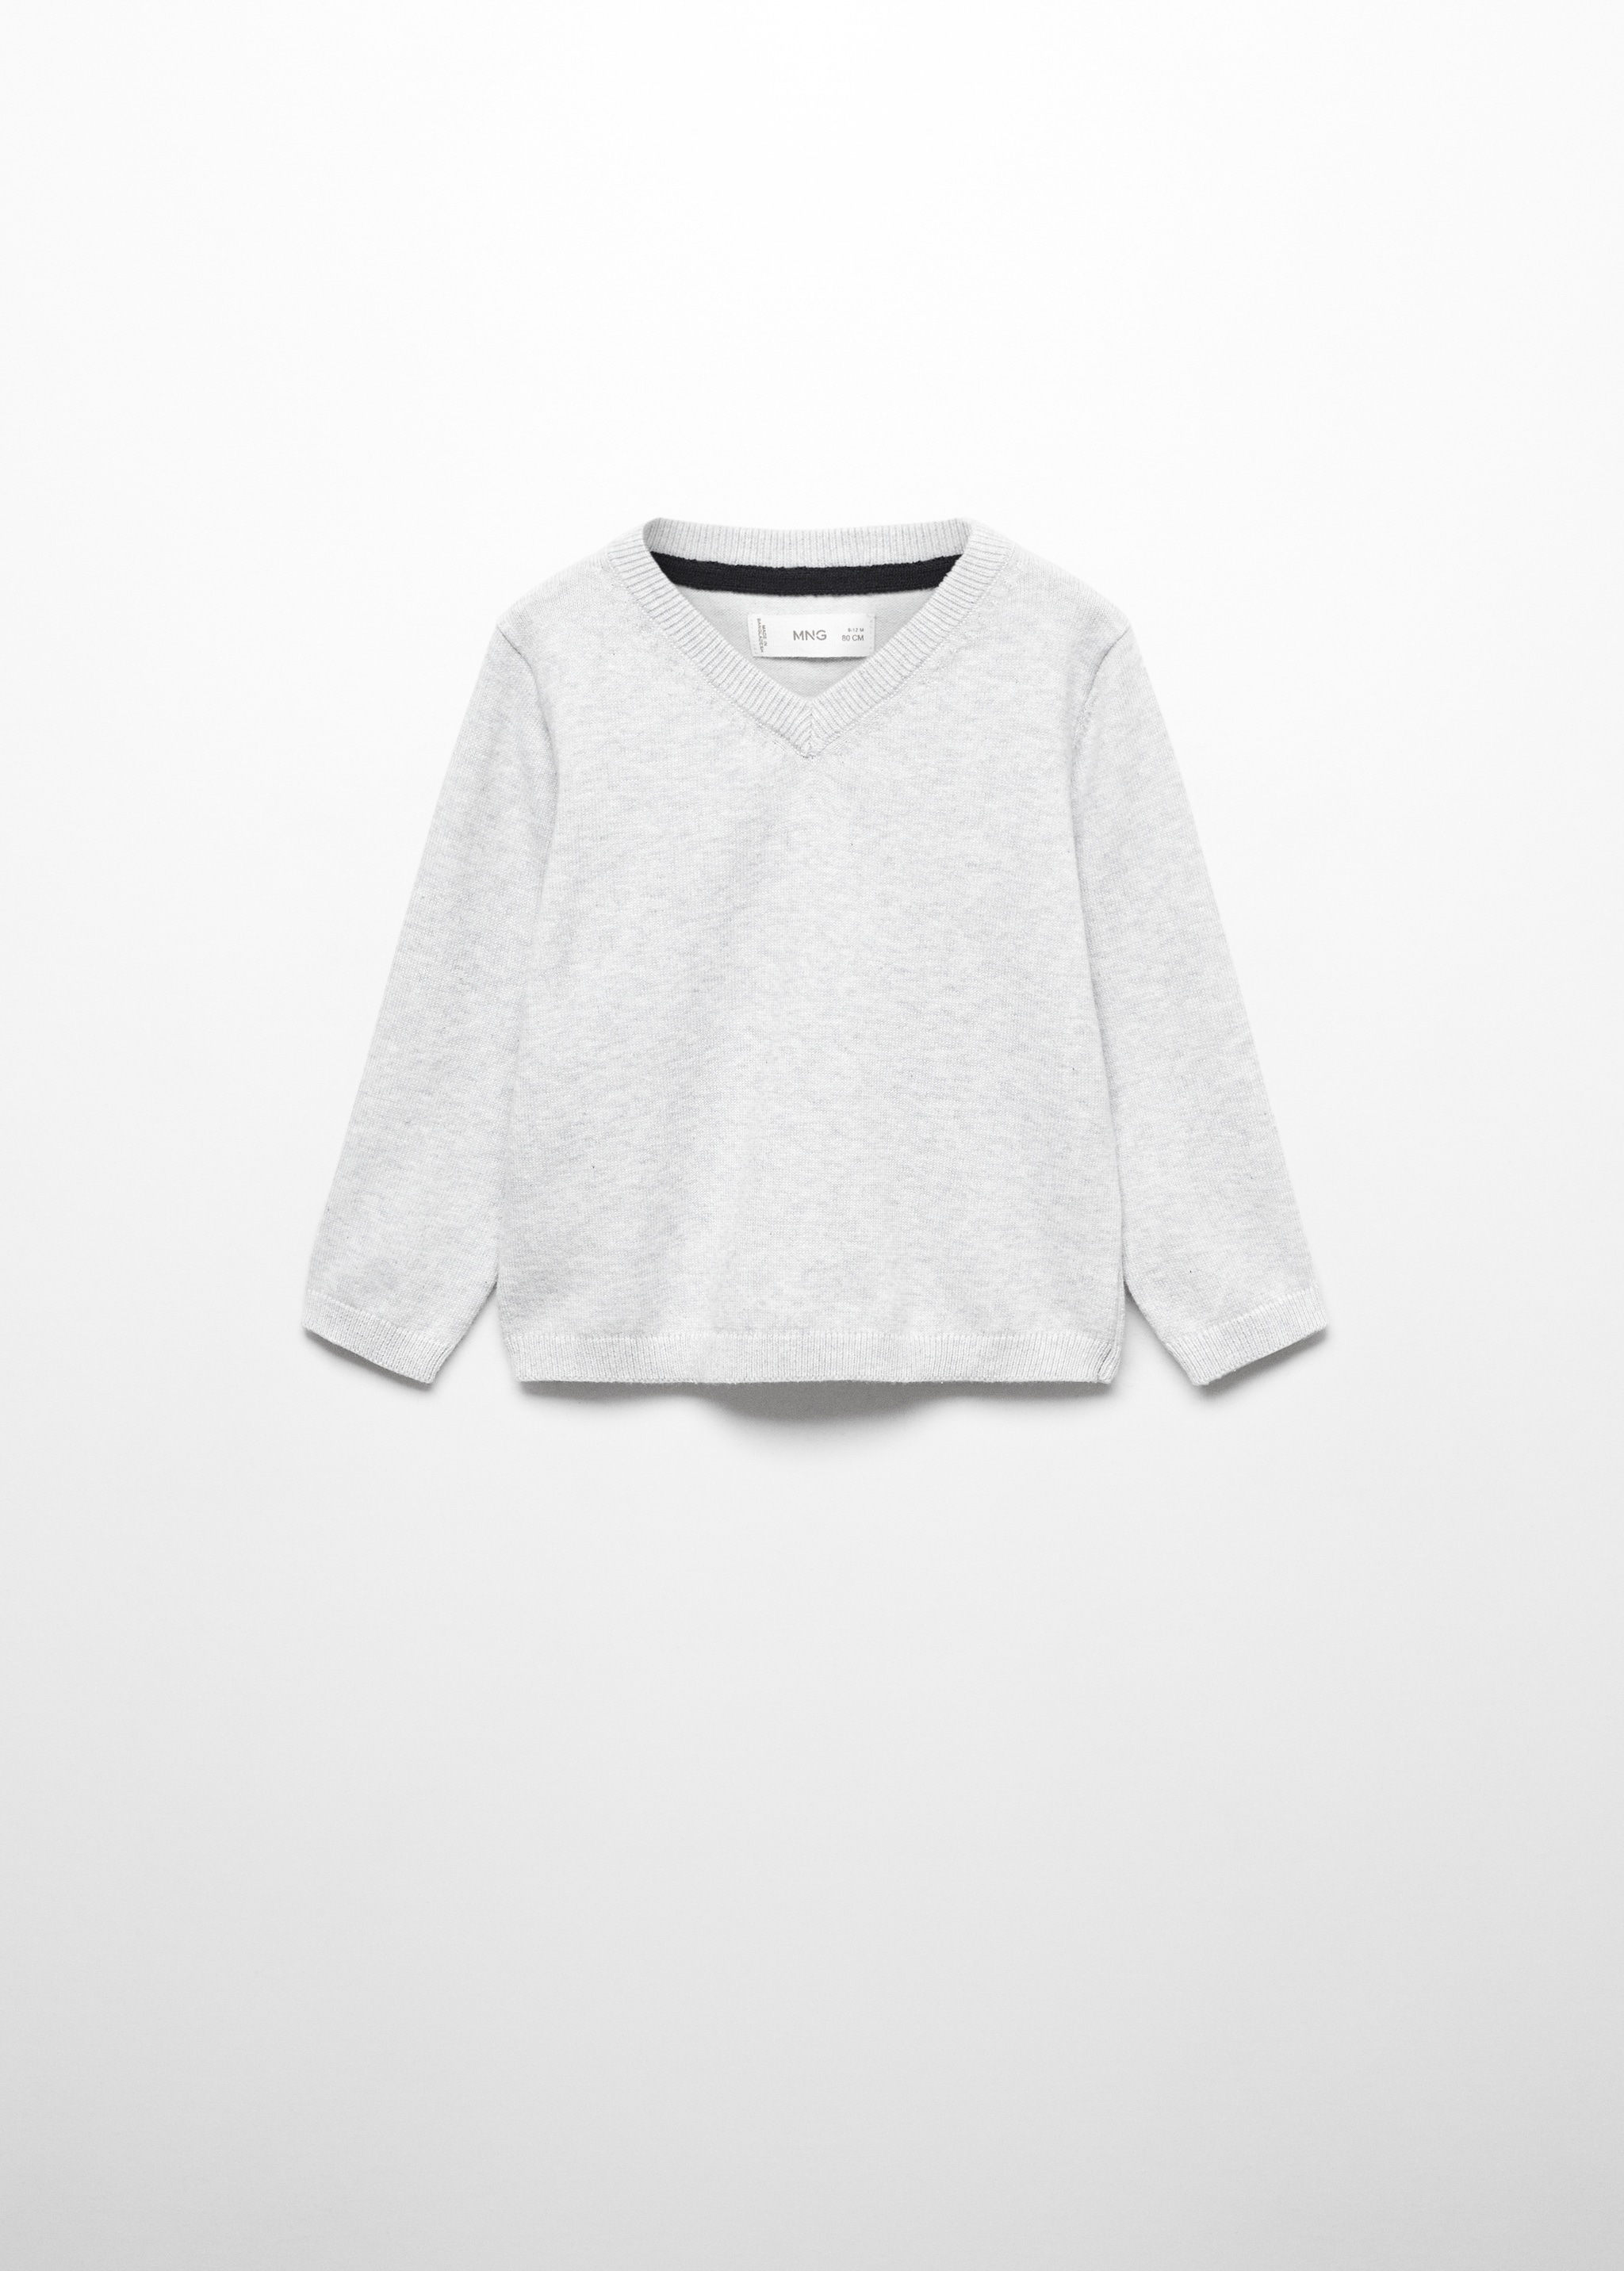 V-neck sweater - Изделие без модели